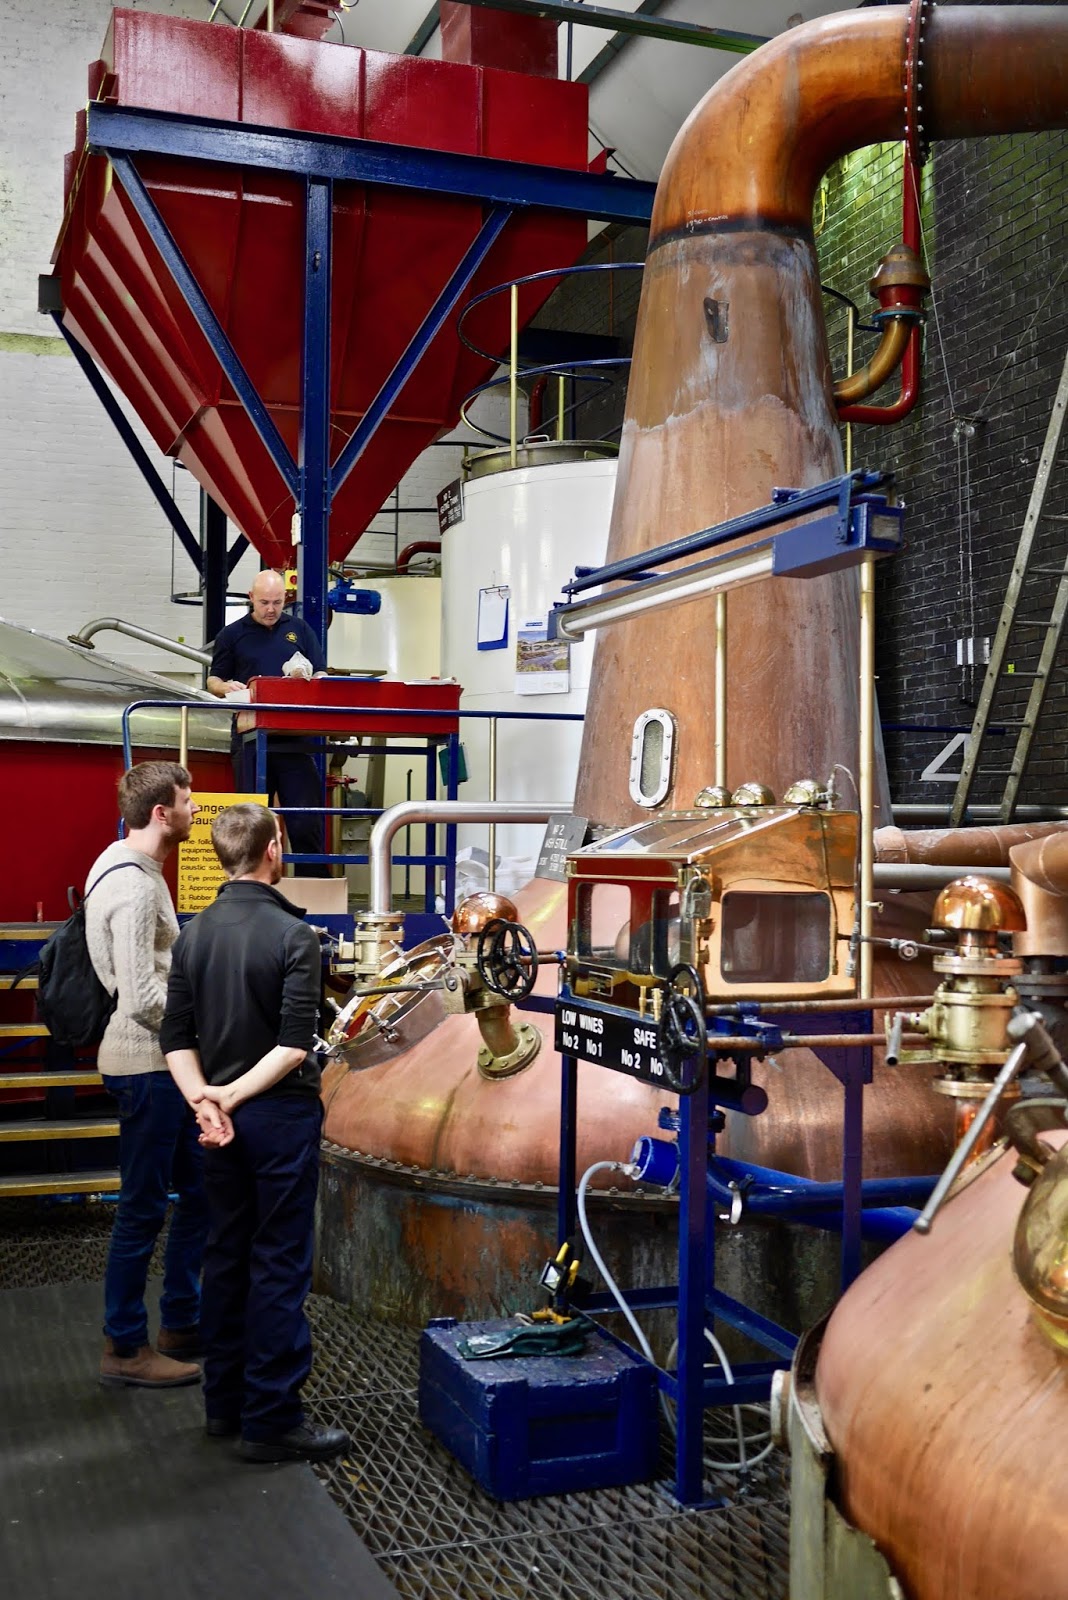 Tullibardine whisky distillery tour including stills, wash, wart and tasting rooms